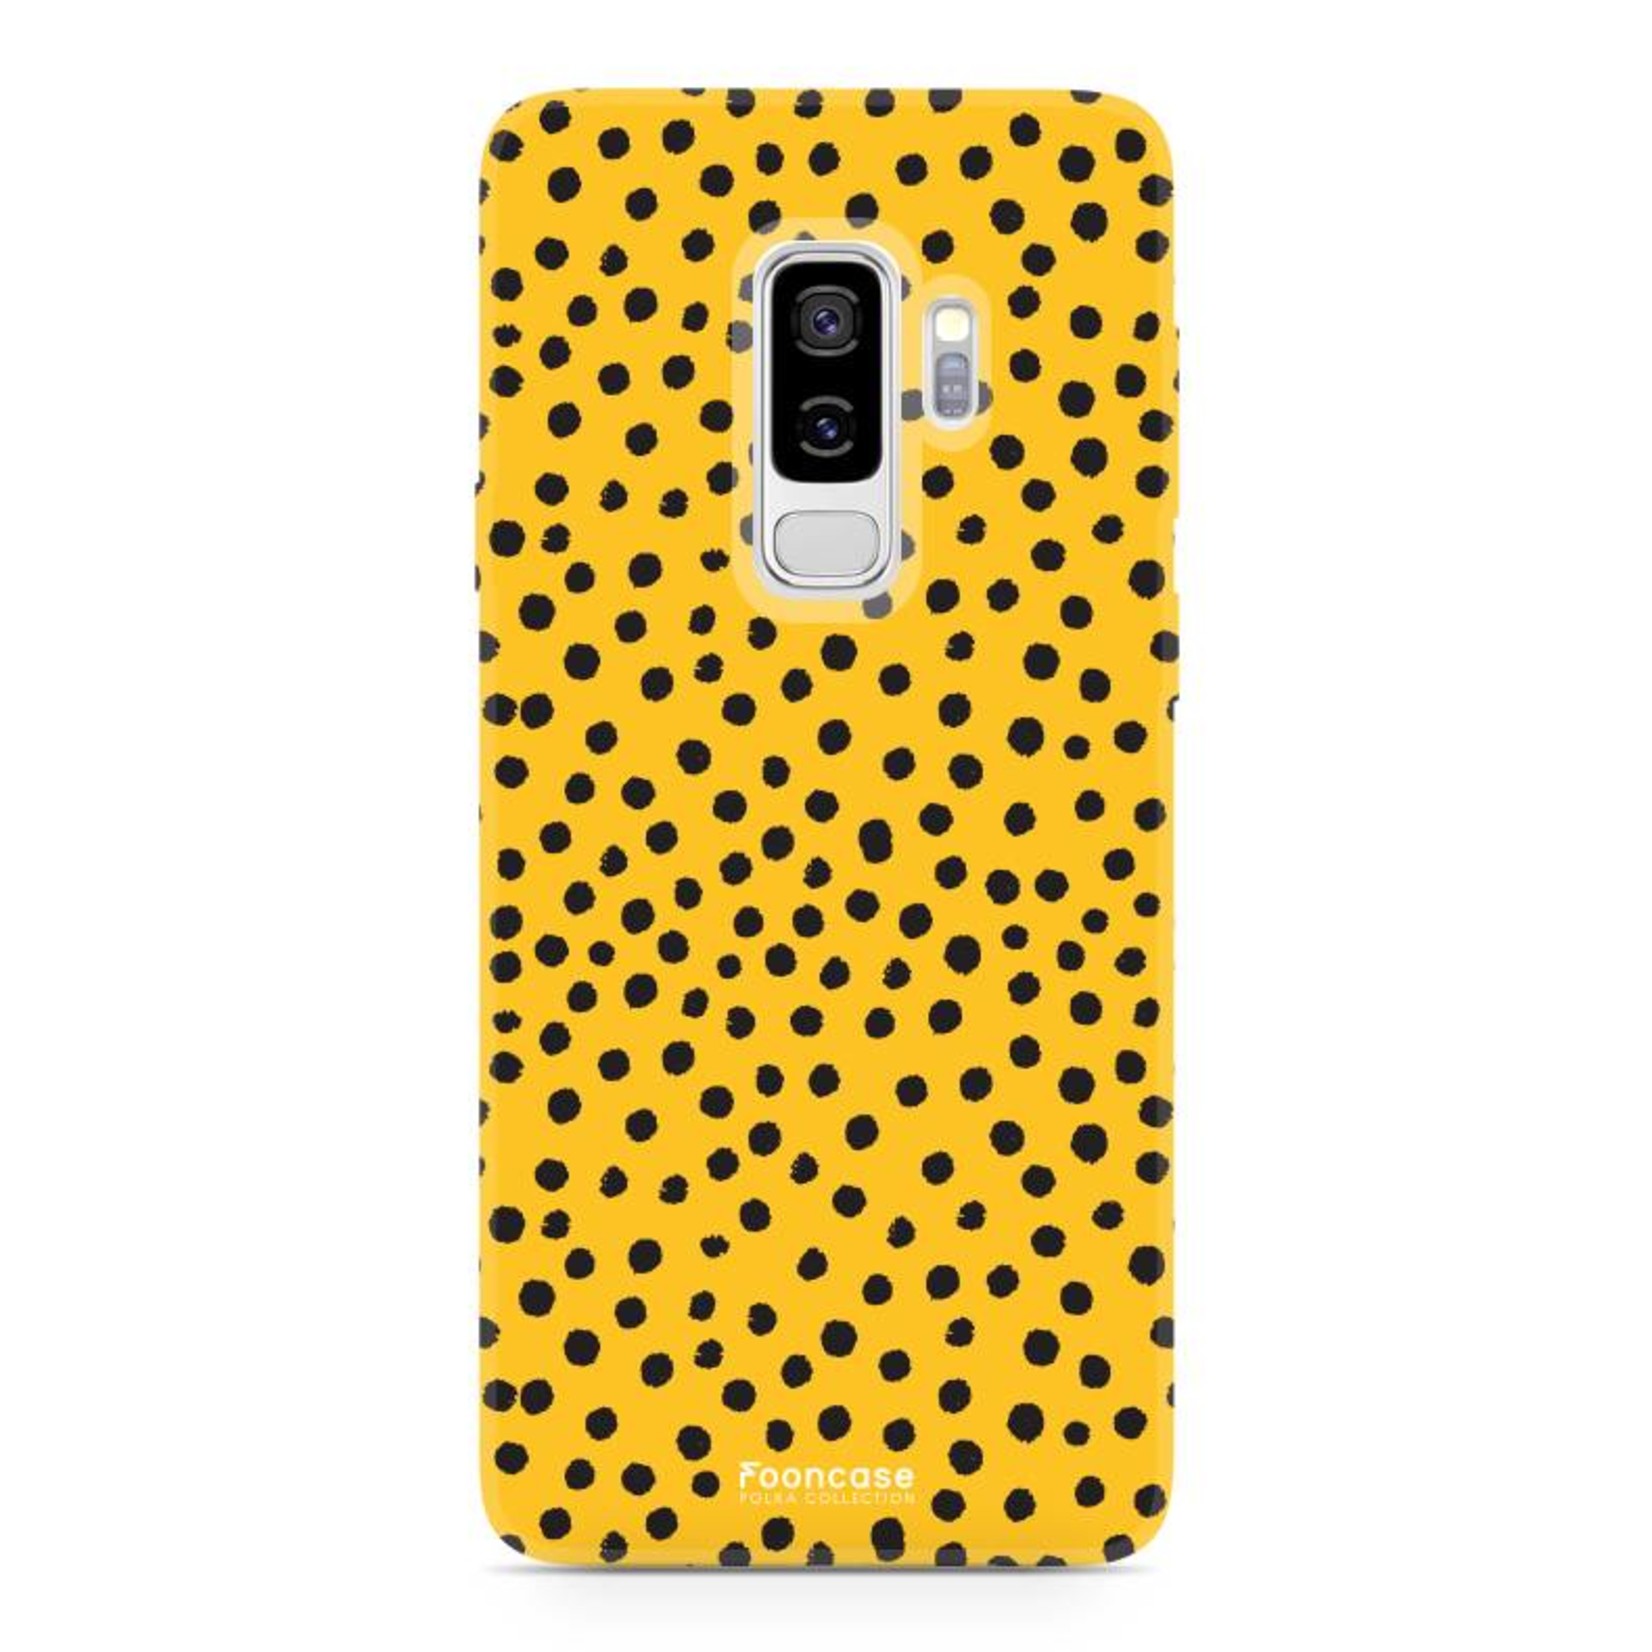 FOONCASE Samsung Galaxy S9 Plus - POLKA COLLECTION / Ocher Yellow